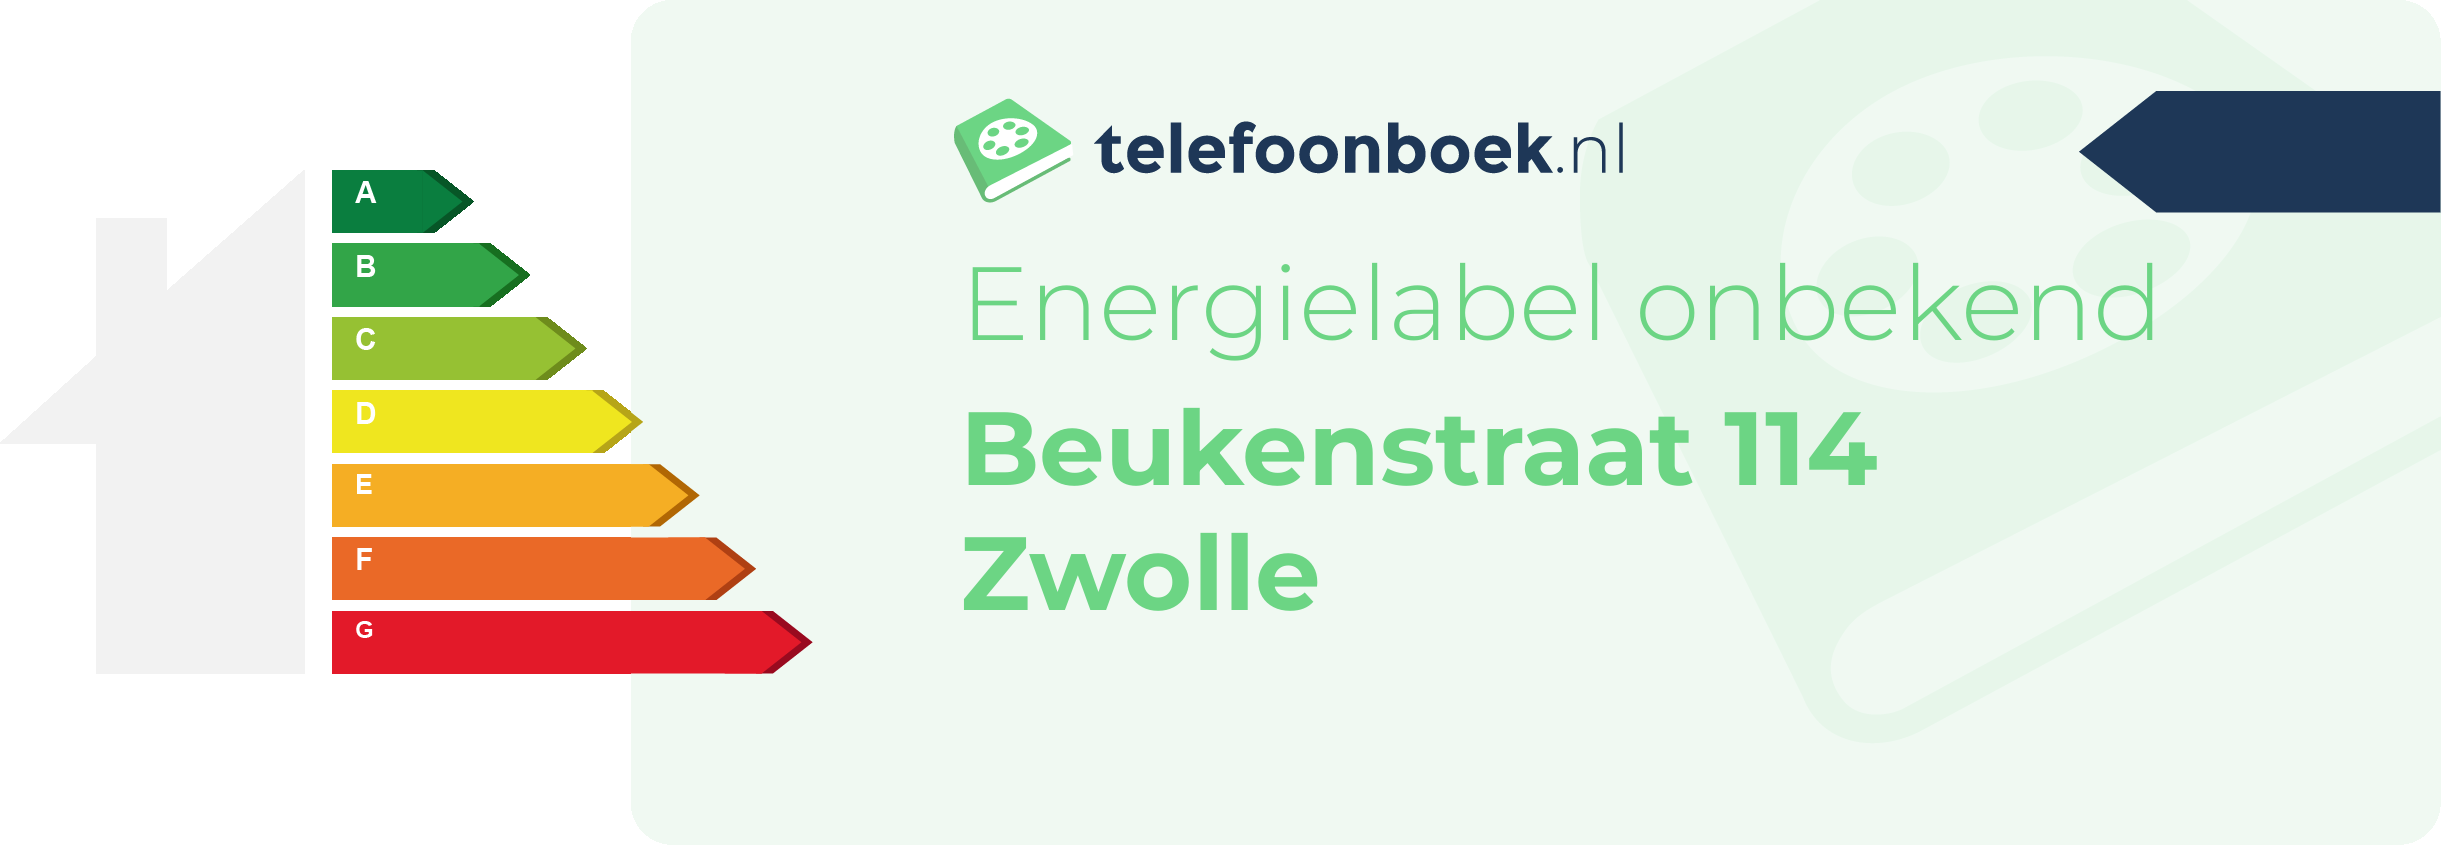 Energielabel Beukenstraat 114 Zwolle